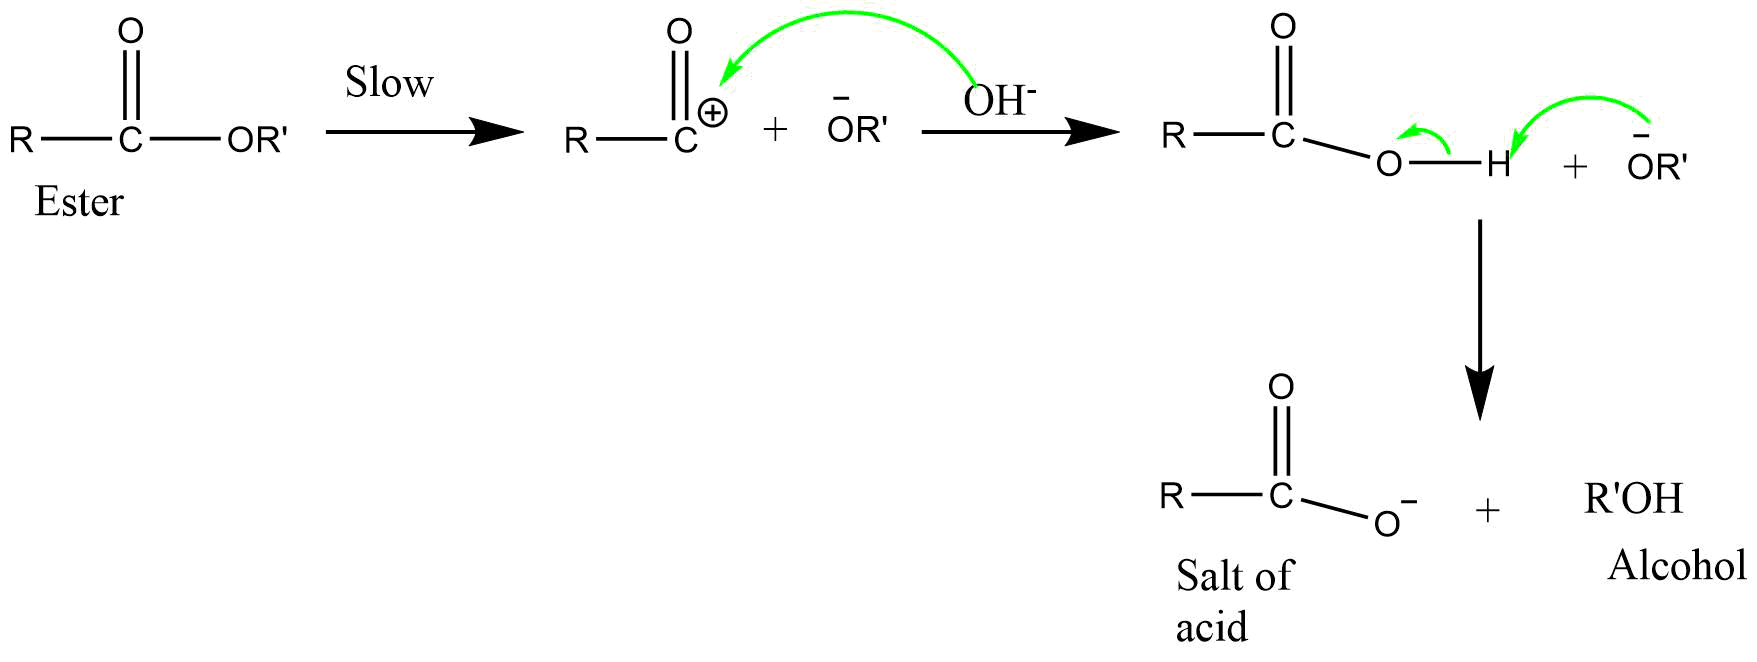 BAC1 (Base catalyzed acyl bond cleavage unimolecular reaction)